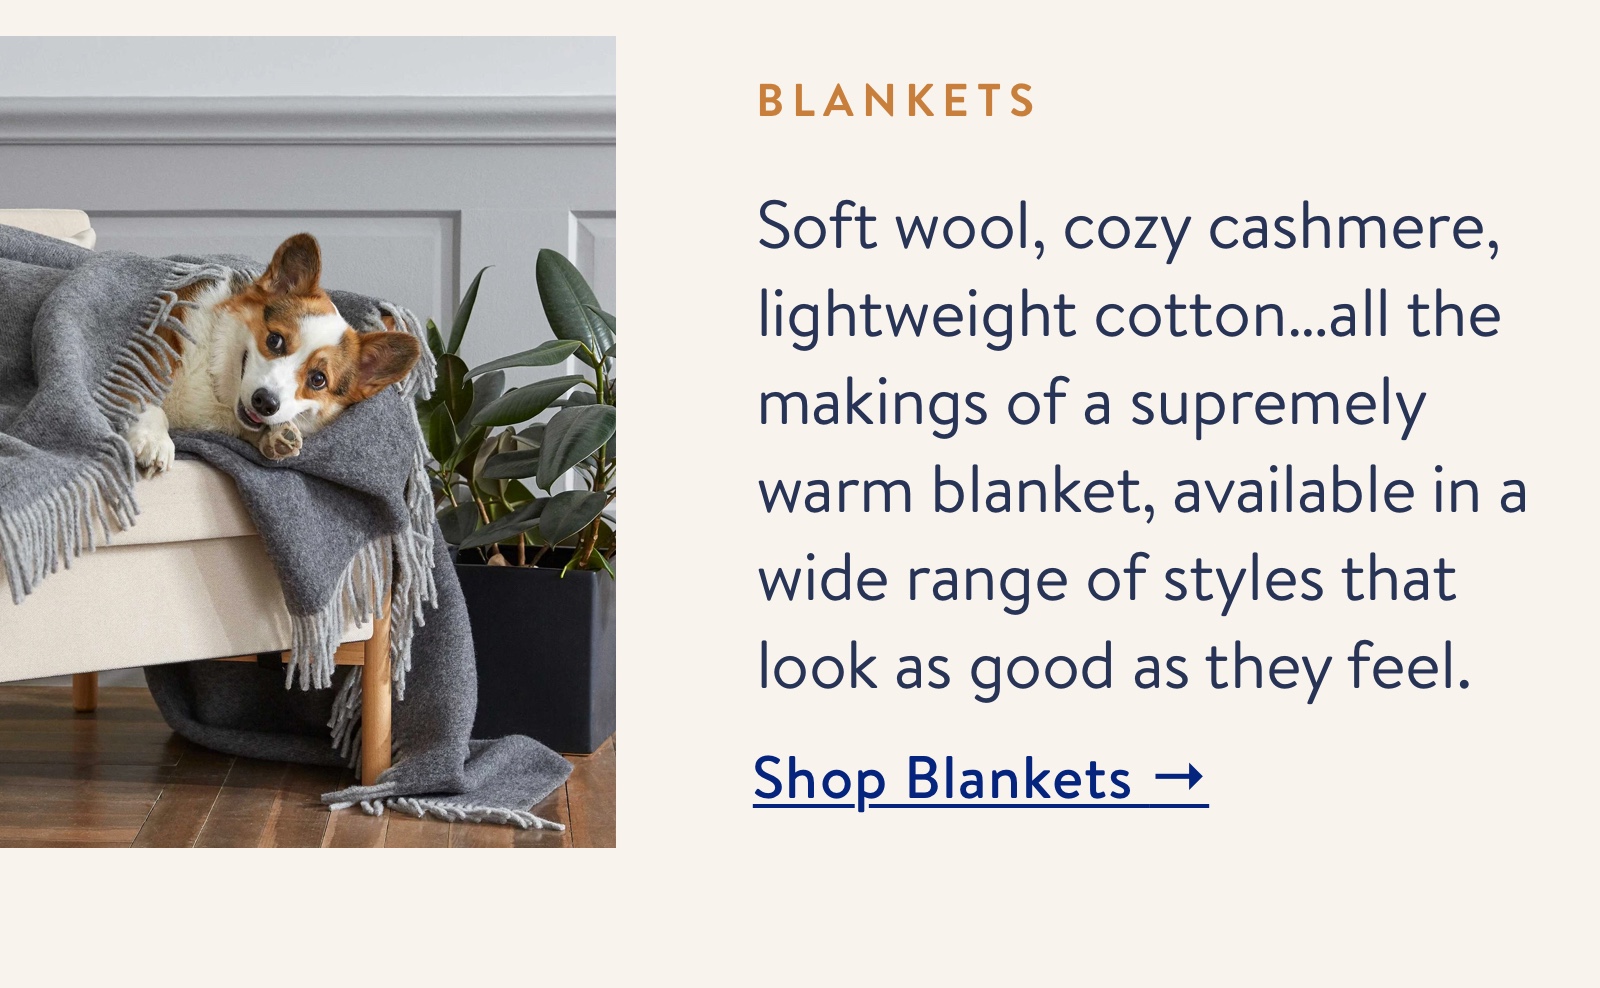 Soft wool, cozy cashmere, lightweight cotton. Shop Blankets